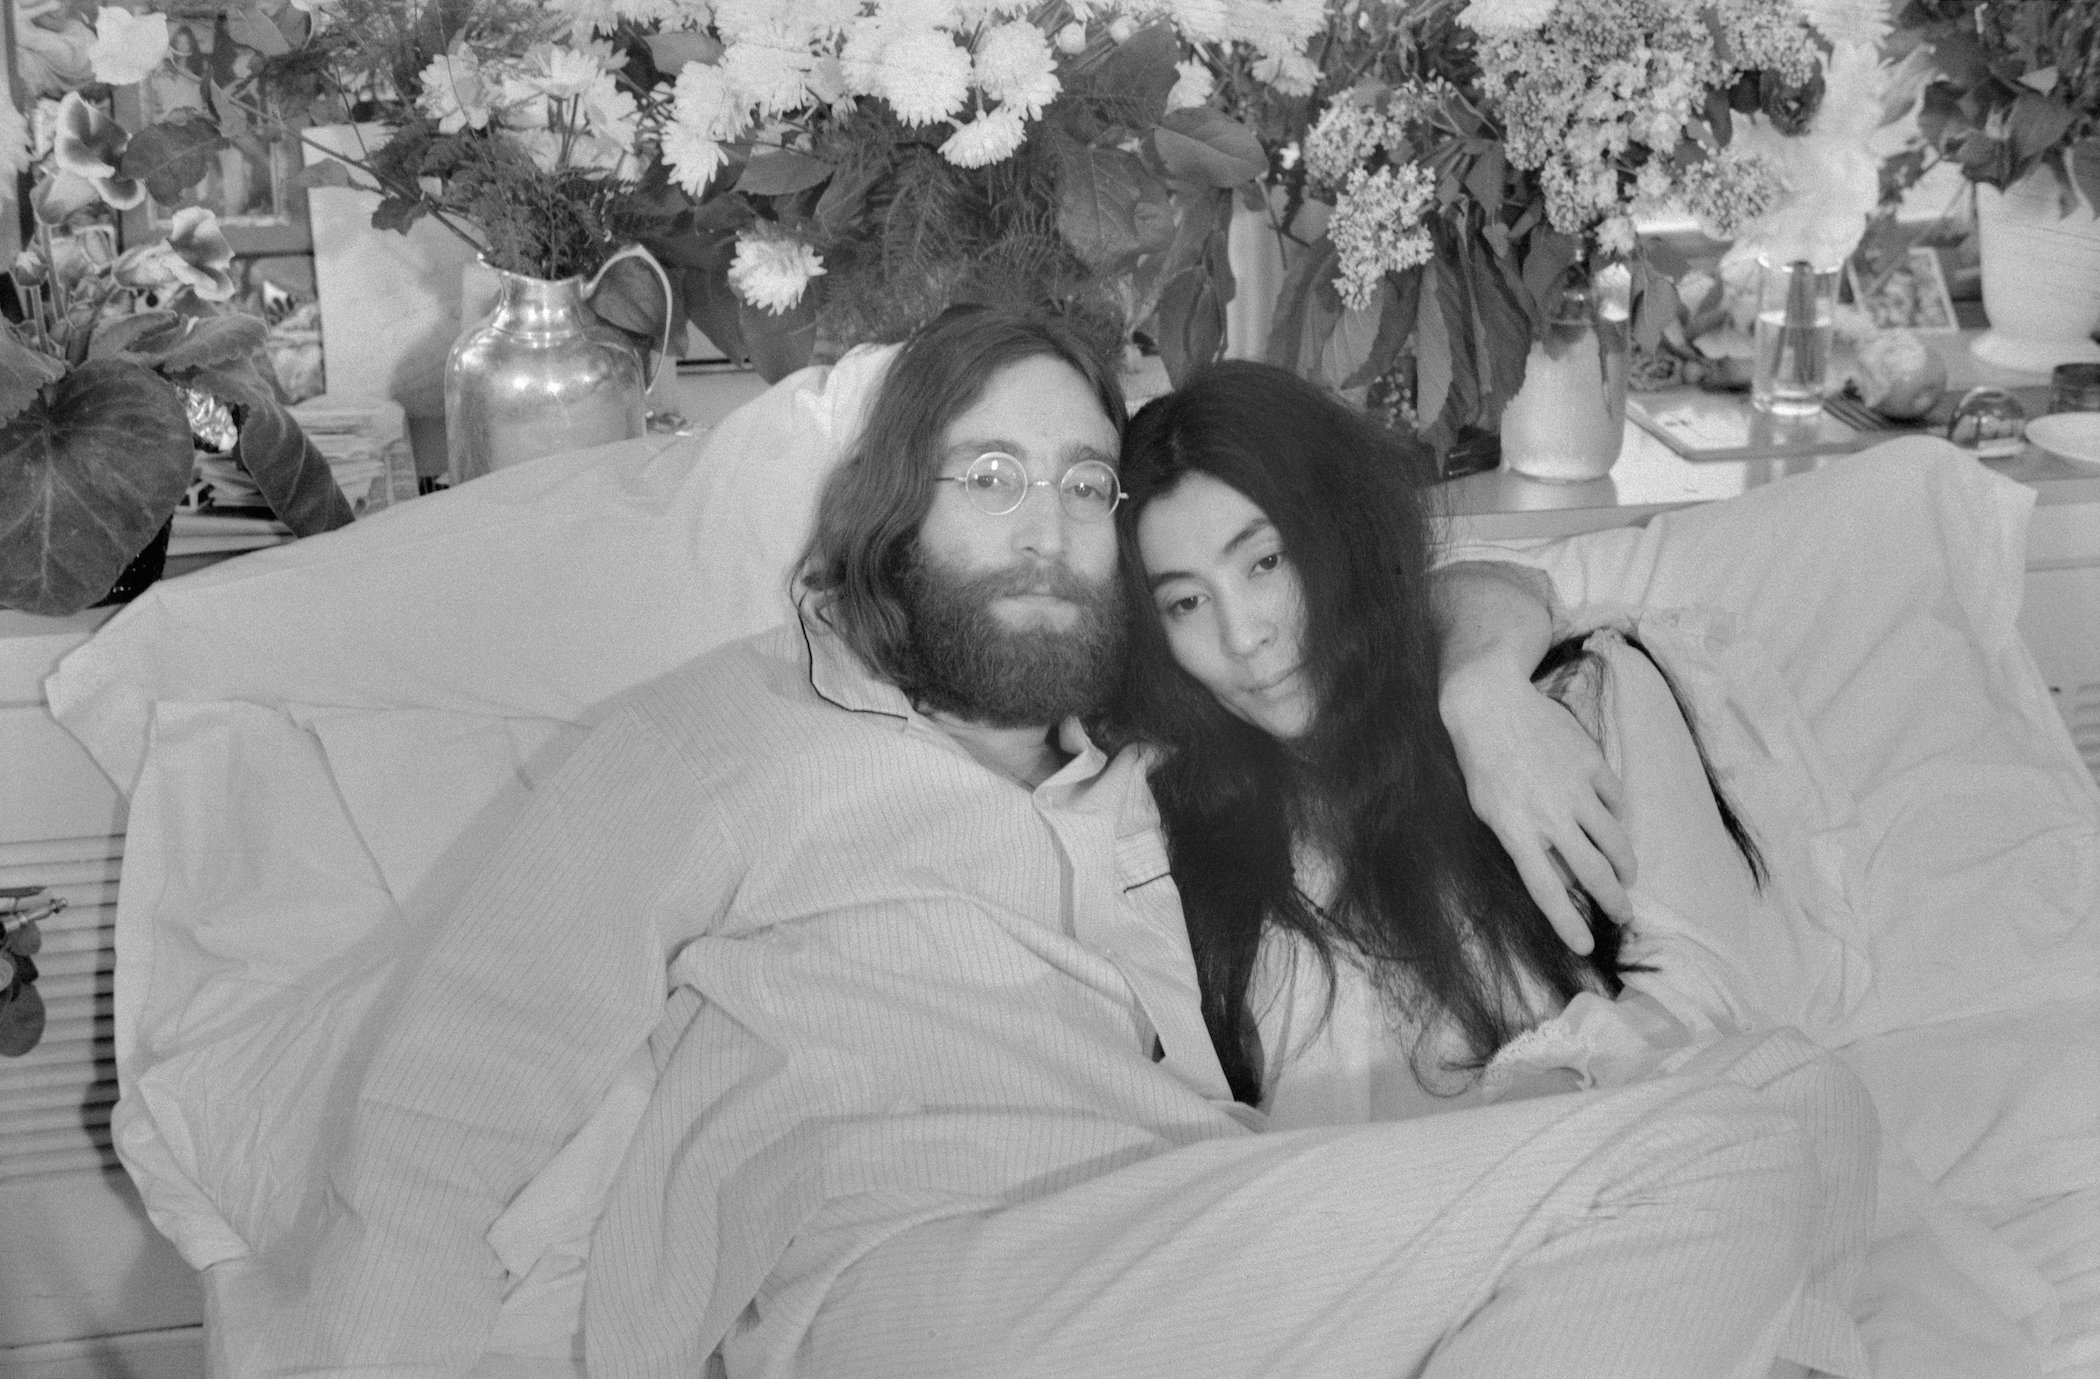 Yoko and John...Beatle John Lennon and Yoko Ono pose in bed